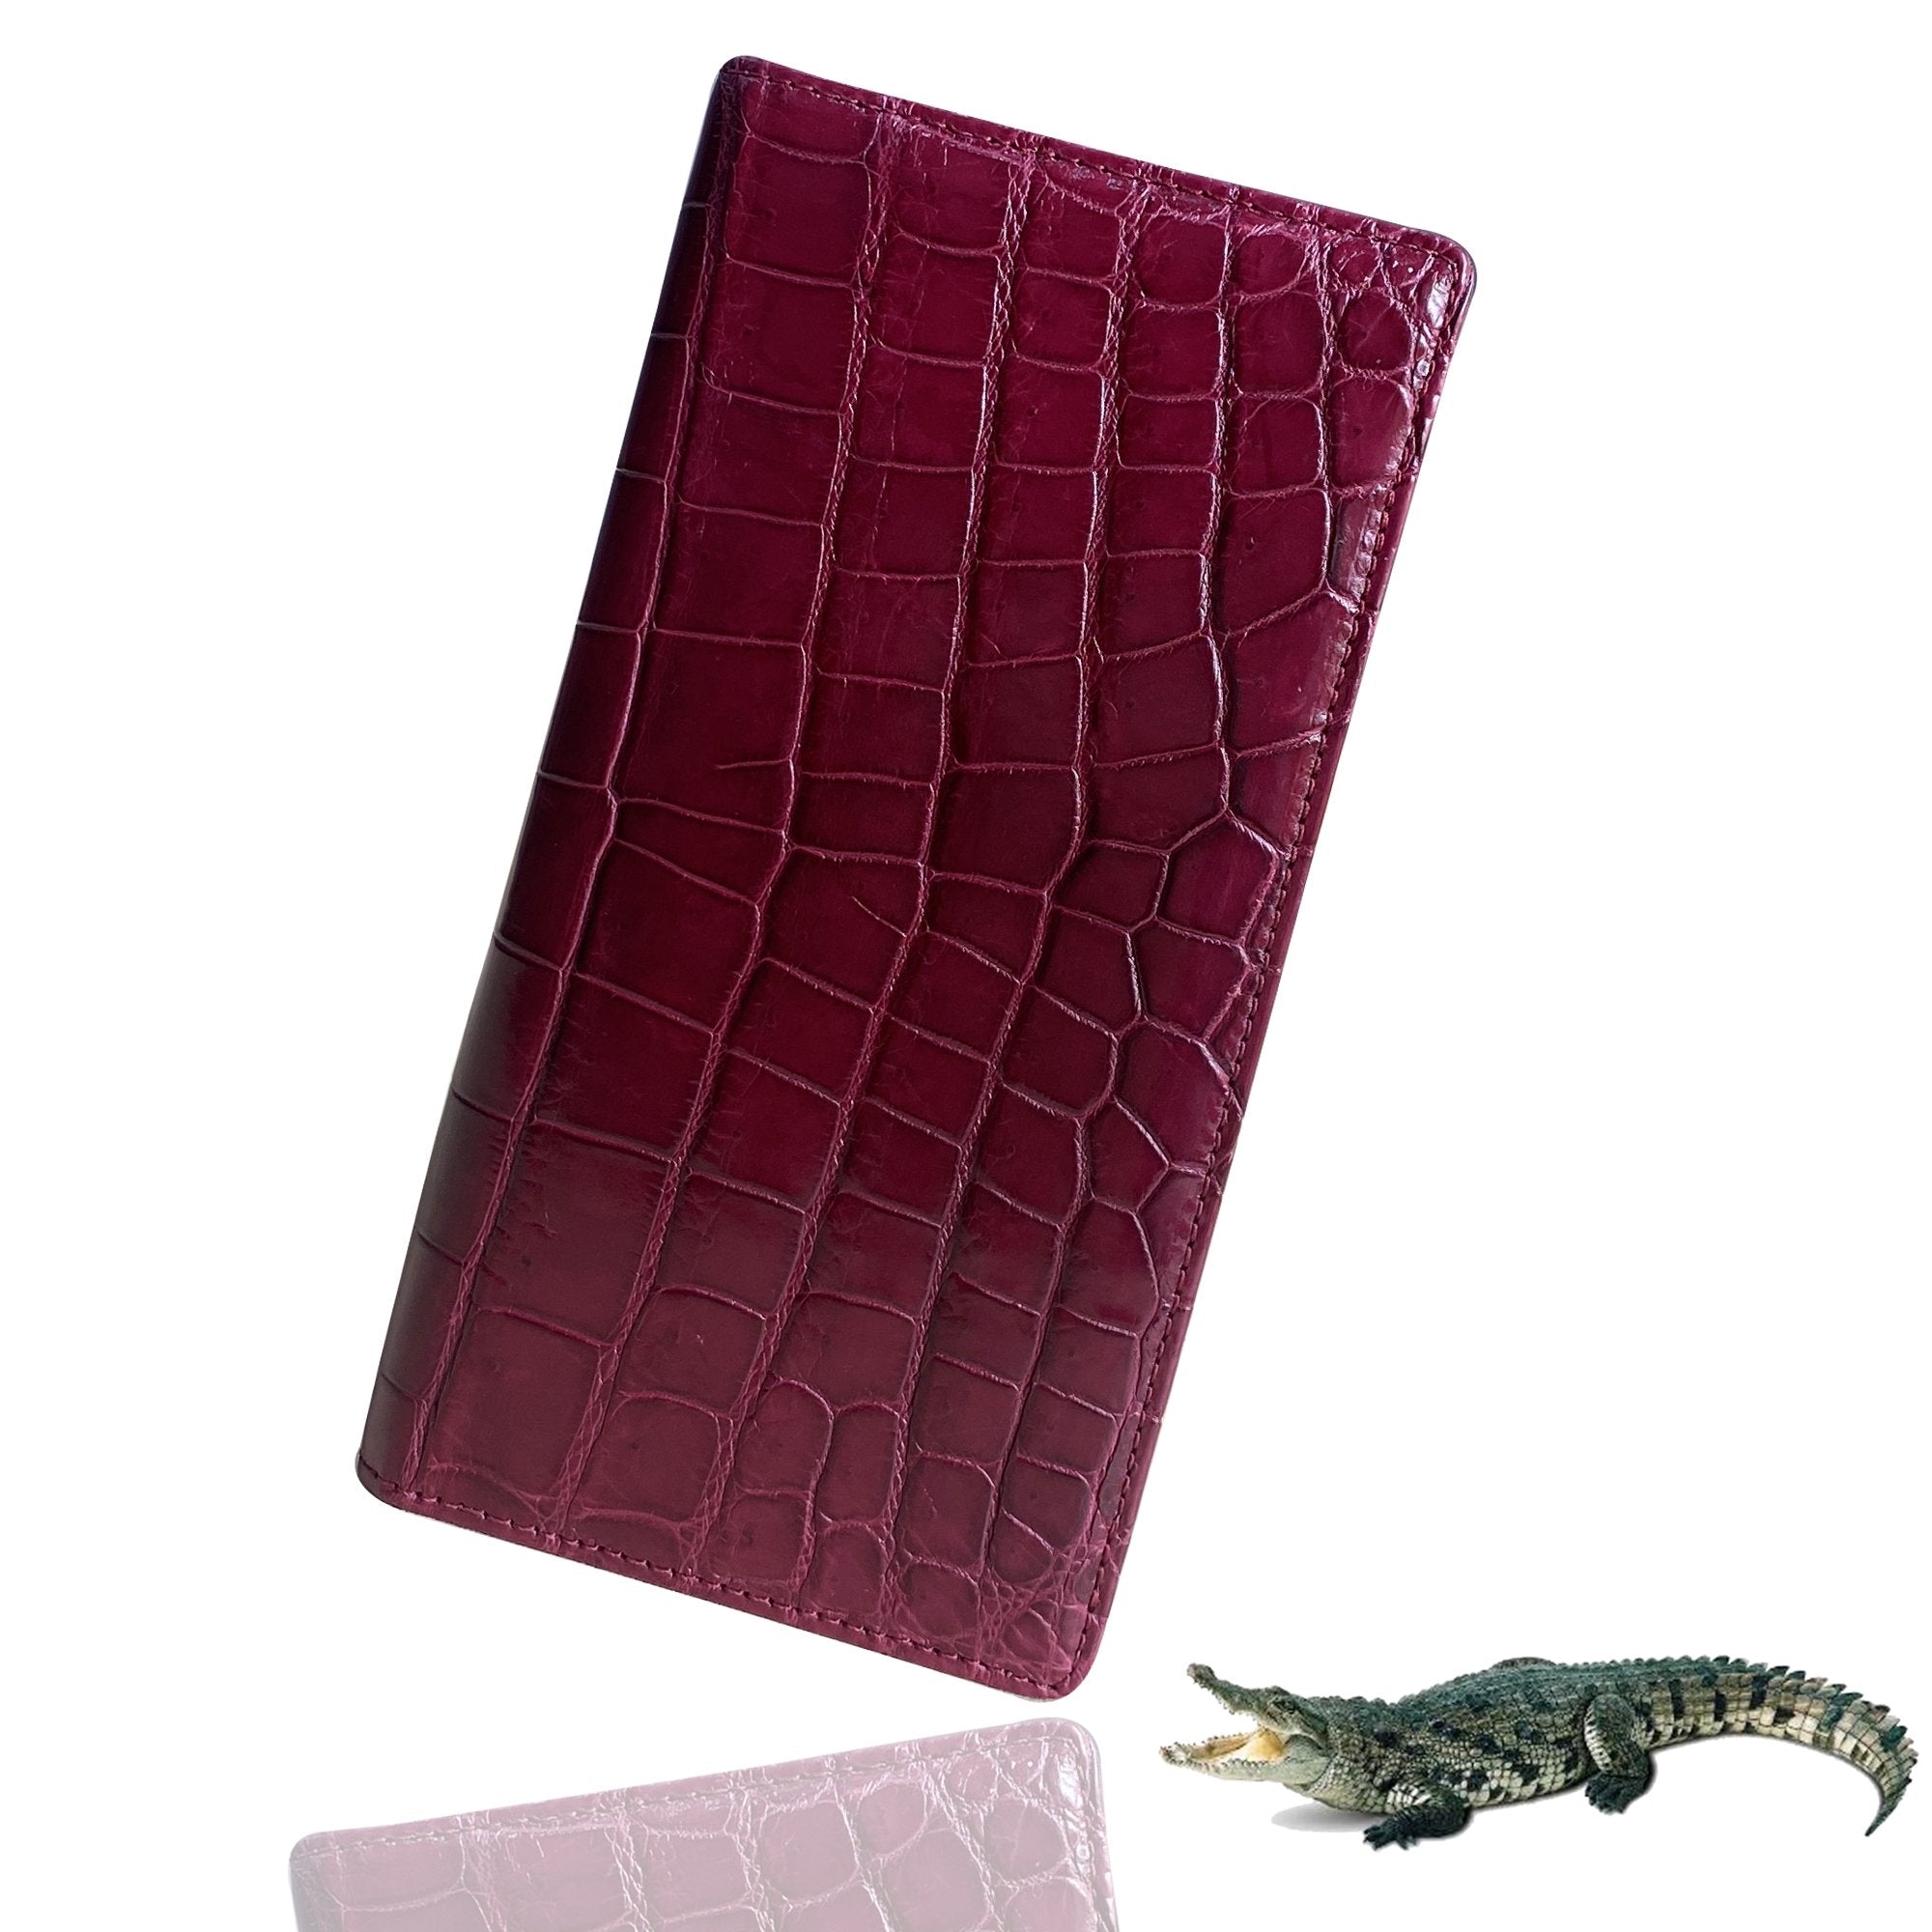 Burgundy Alligator Long Wallet For Men | Premium Crocodile Belly Leather Checkbook | RFID Blocking | LON70 - Vinacreations